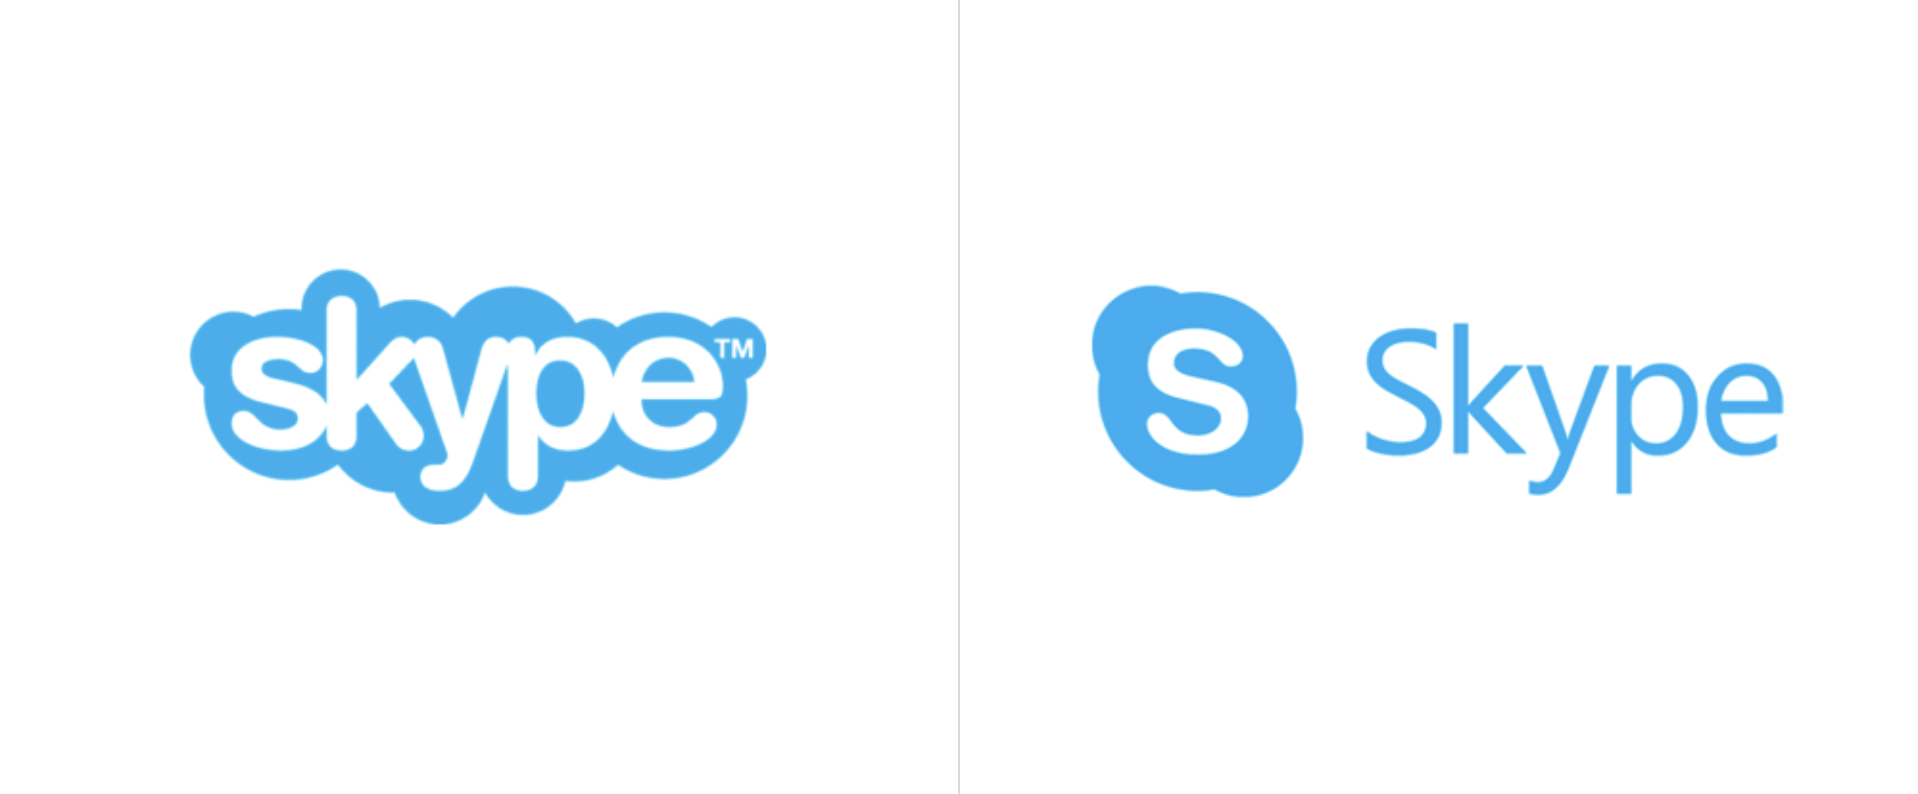 Old vs New Microsoft Logo - Microsoft introduces a new Skype logo ahead of the app's big